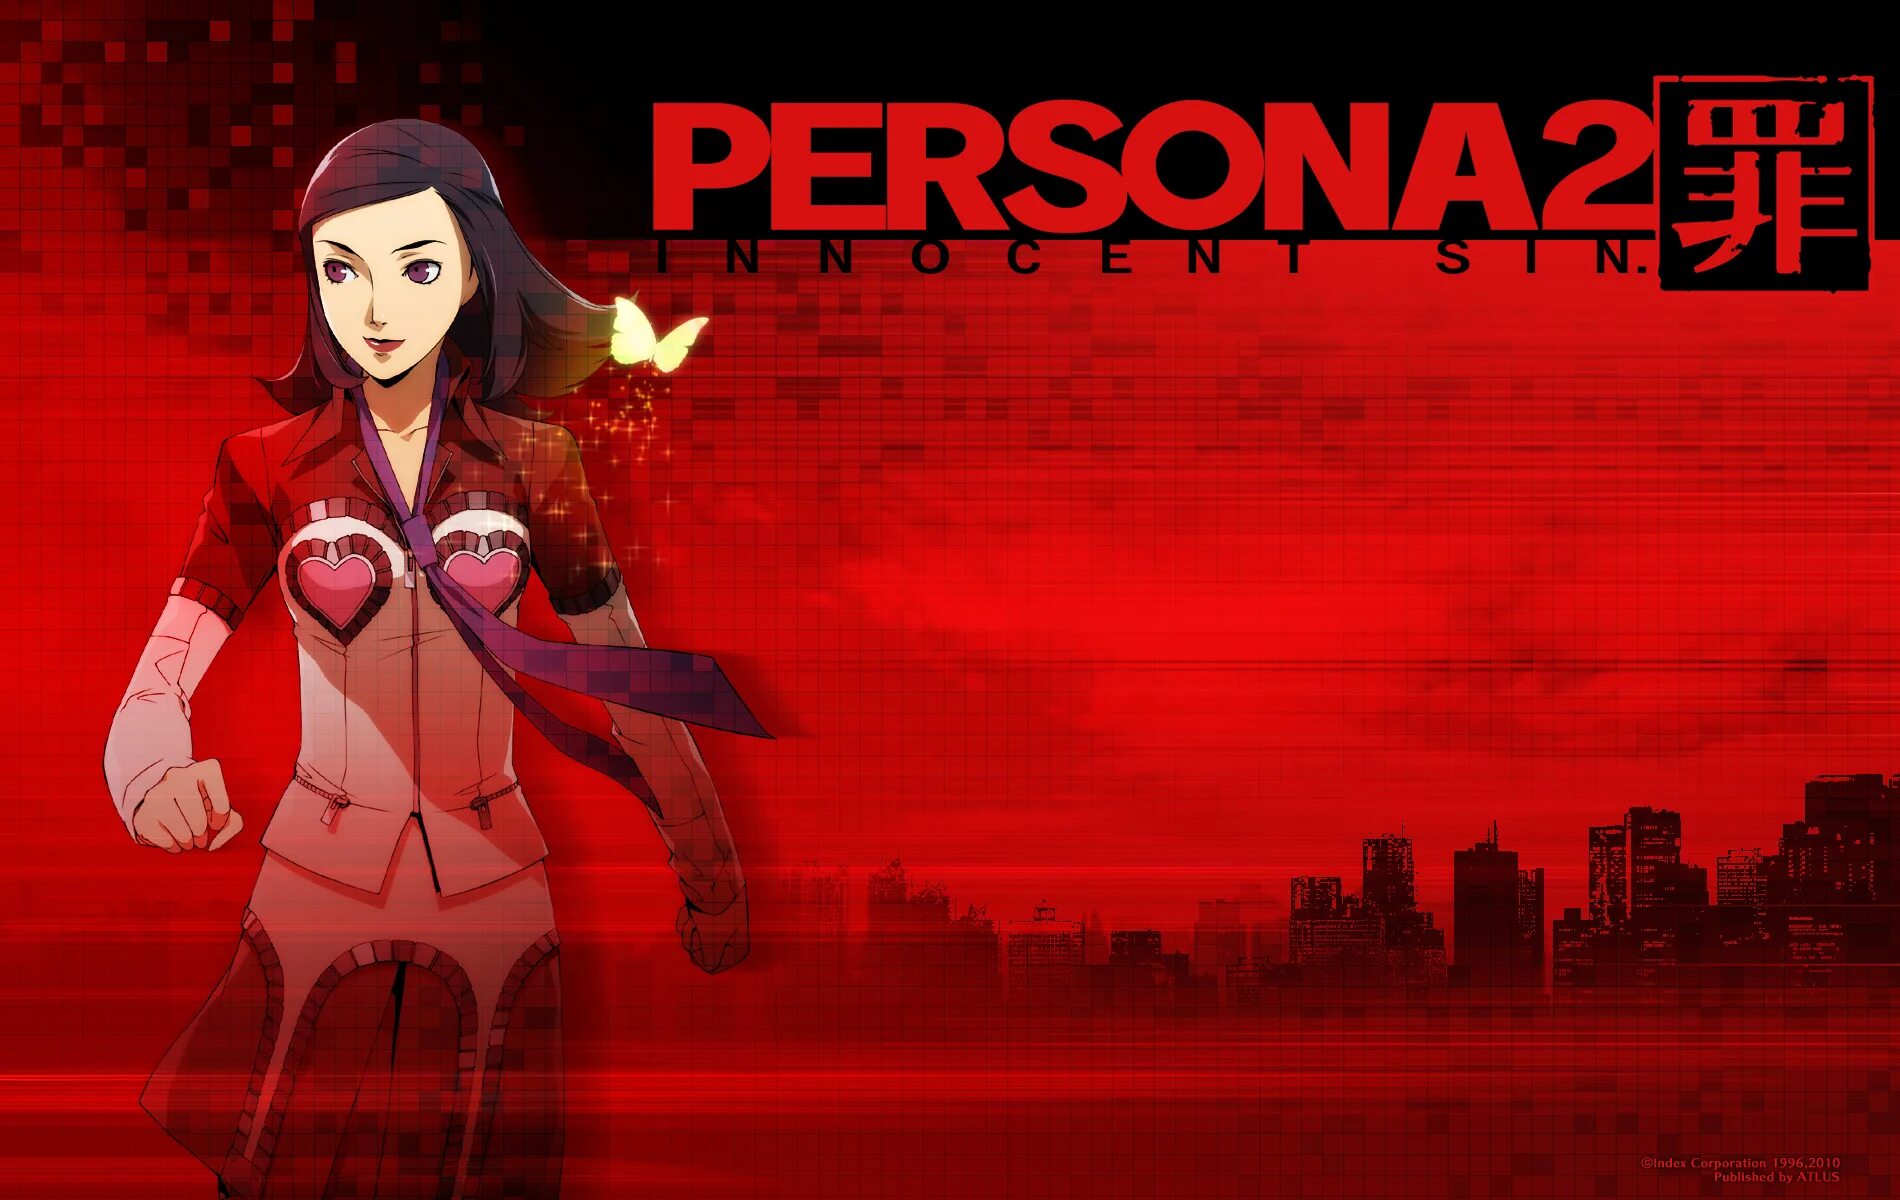 Shin Megami Tensei: persona 2 - innocent sin. Shin Megami Tensei: persona 2 — Eternal punishment. Persona 2 innocent sin обложка. Persona 2 Eternal punishment PSP.